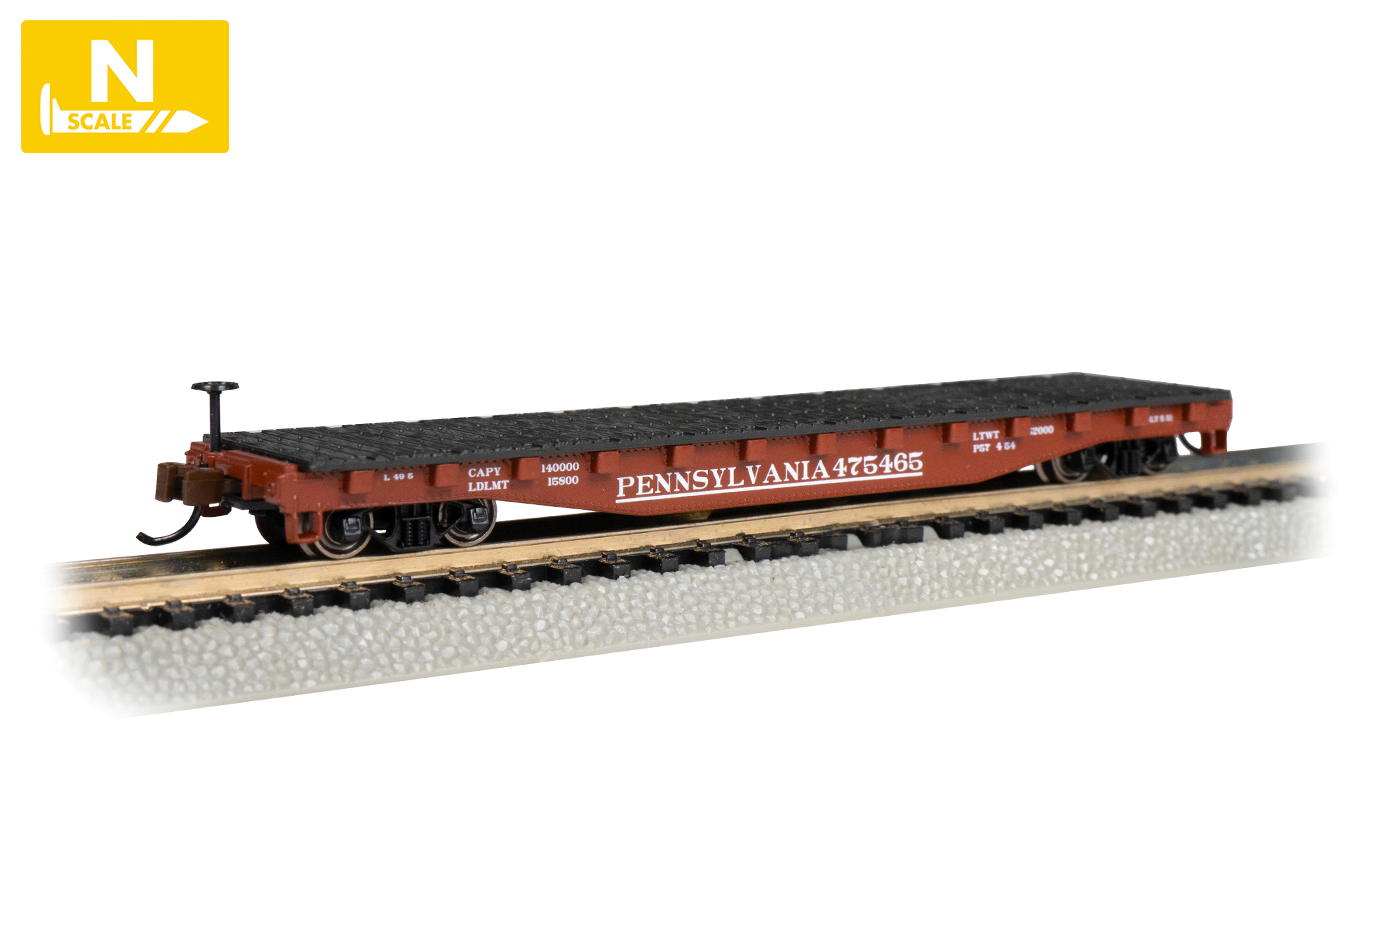 52' Flatcar - Pennsylvania Railroad #475465 (N Scale)